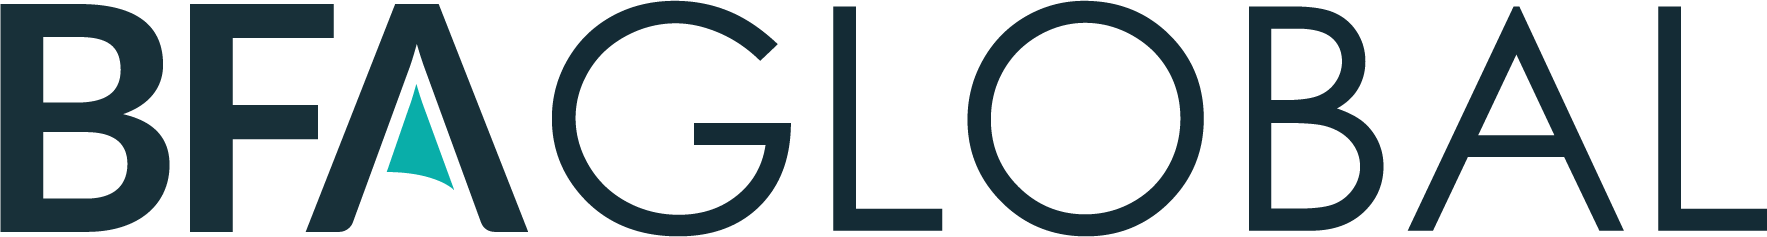 BFAGLOBAL_Logo_landscape_RGB.png